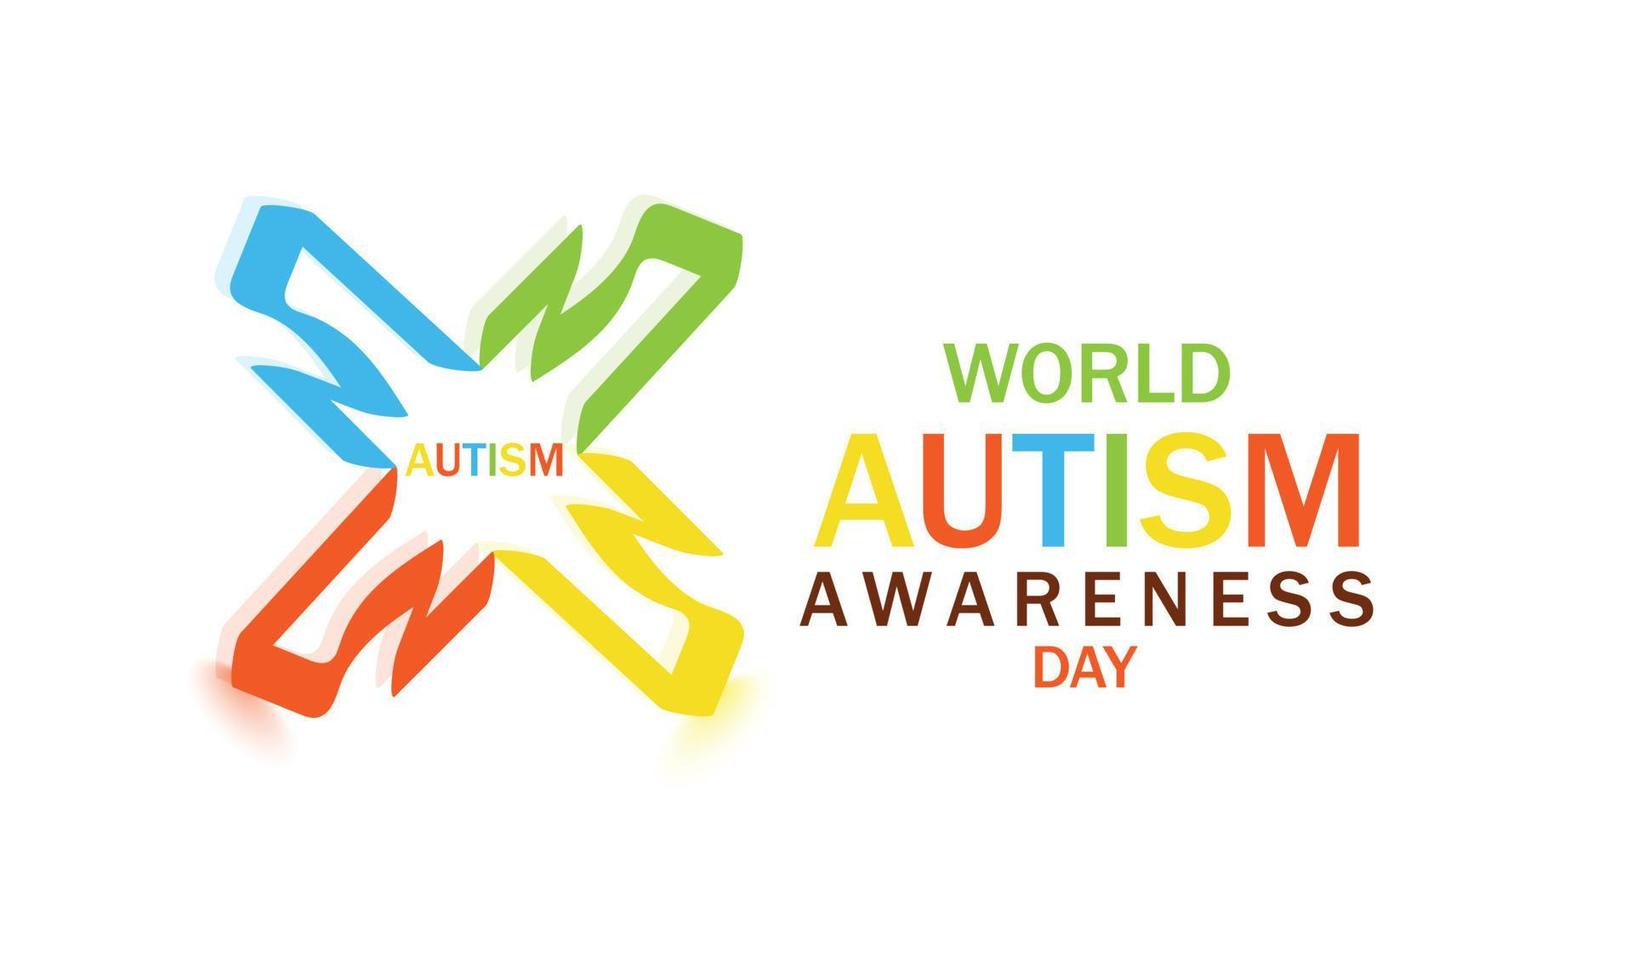 mundo autismo conciencia día abril 2. modelo para fondo, bandera, tarjeta, póster vector